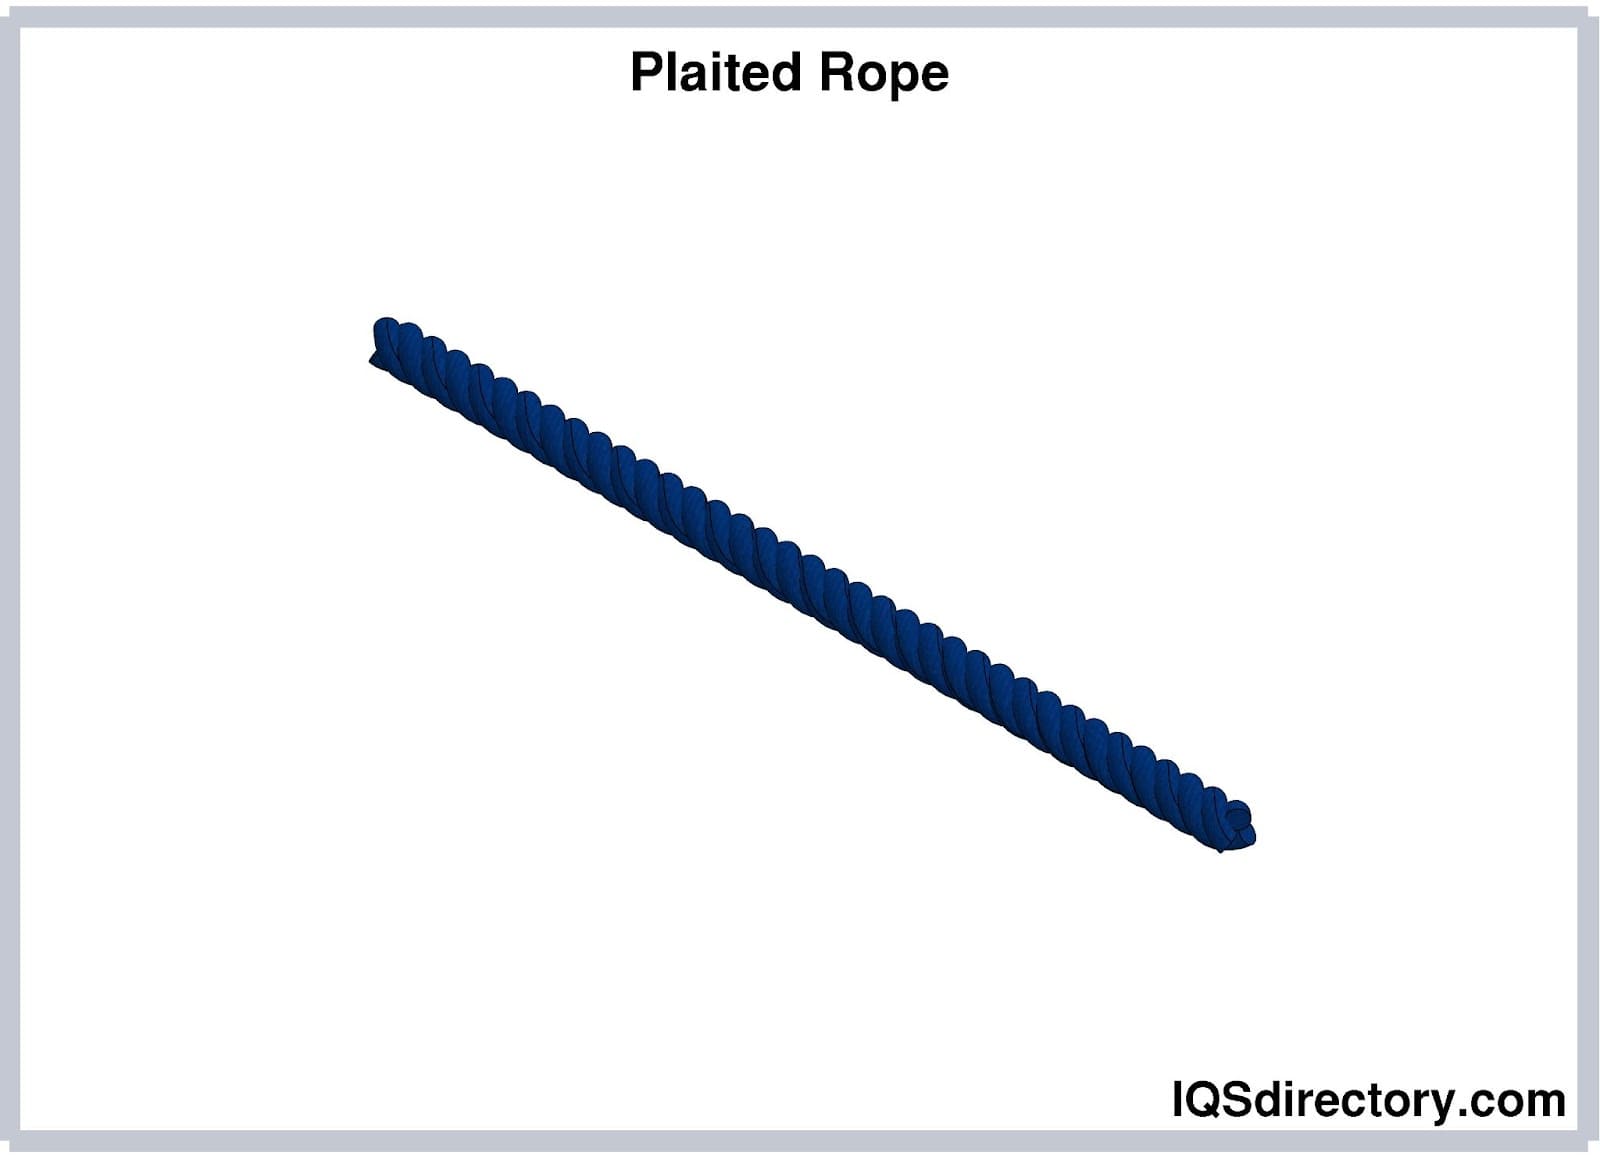 Plaited Rope